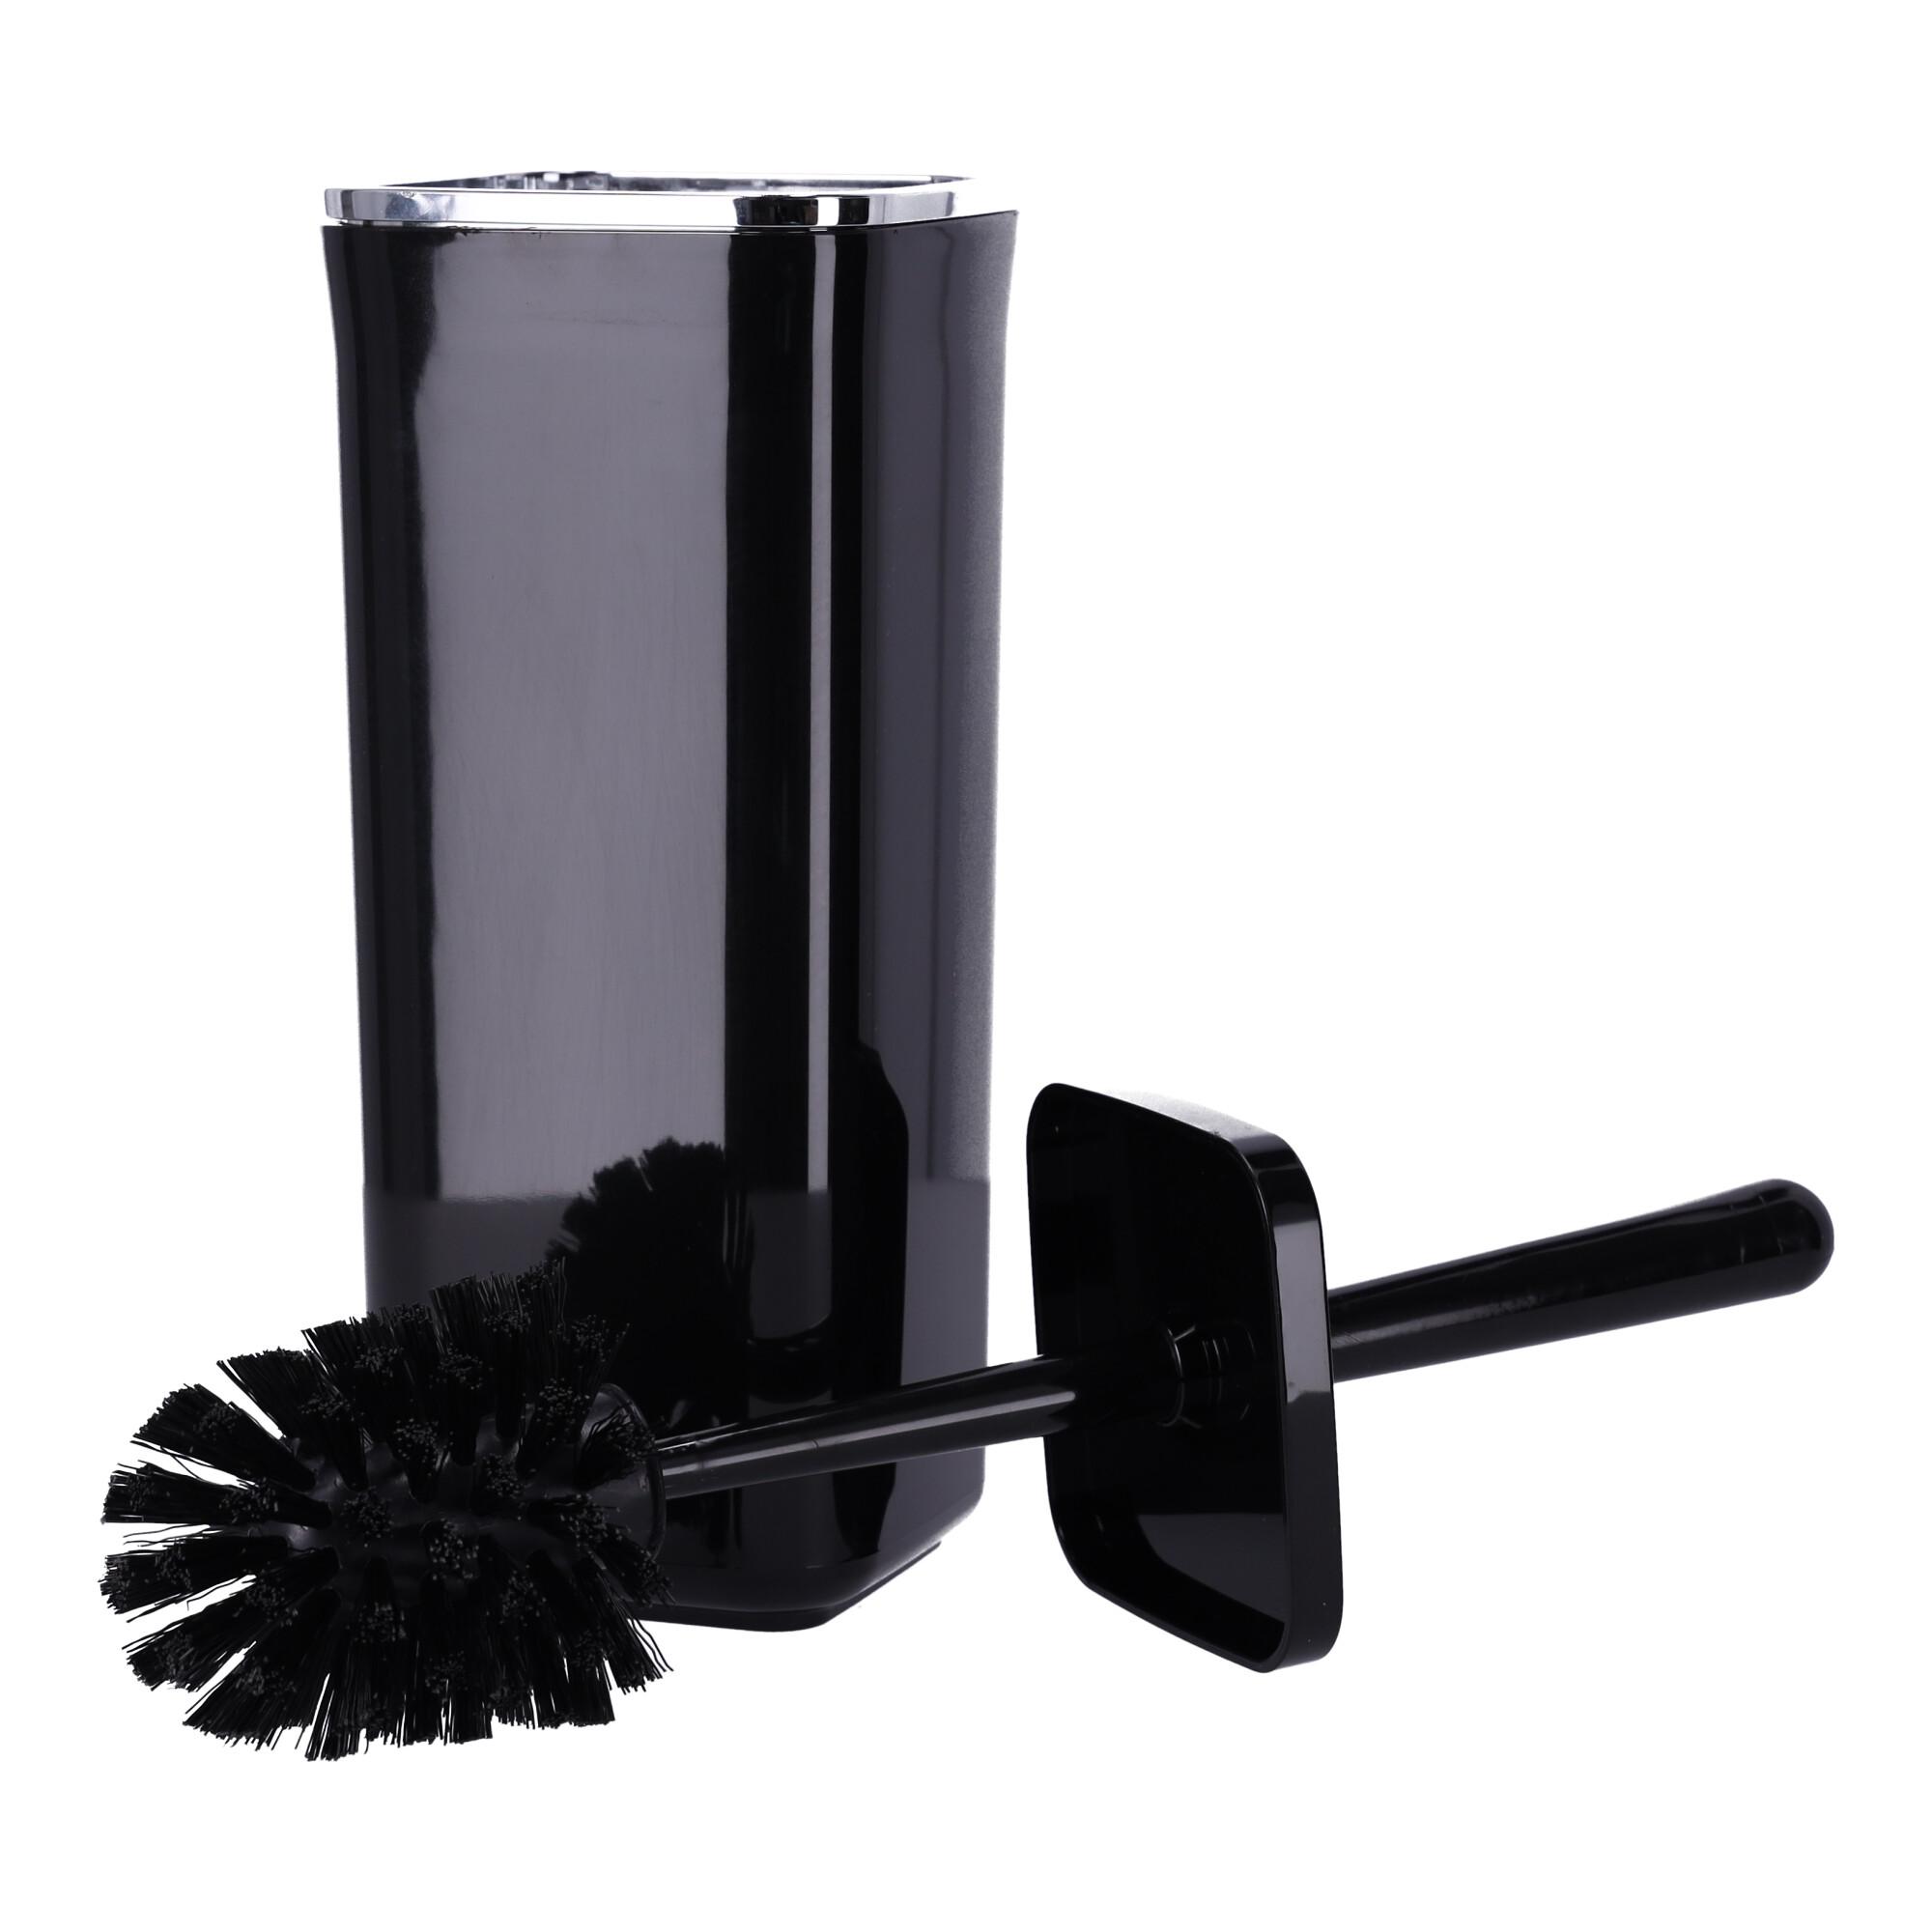 Bathroom accessories set of 5 items BERRETTI, black + chrome